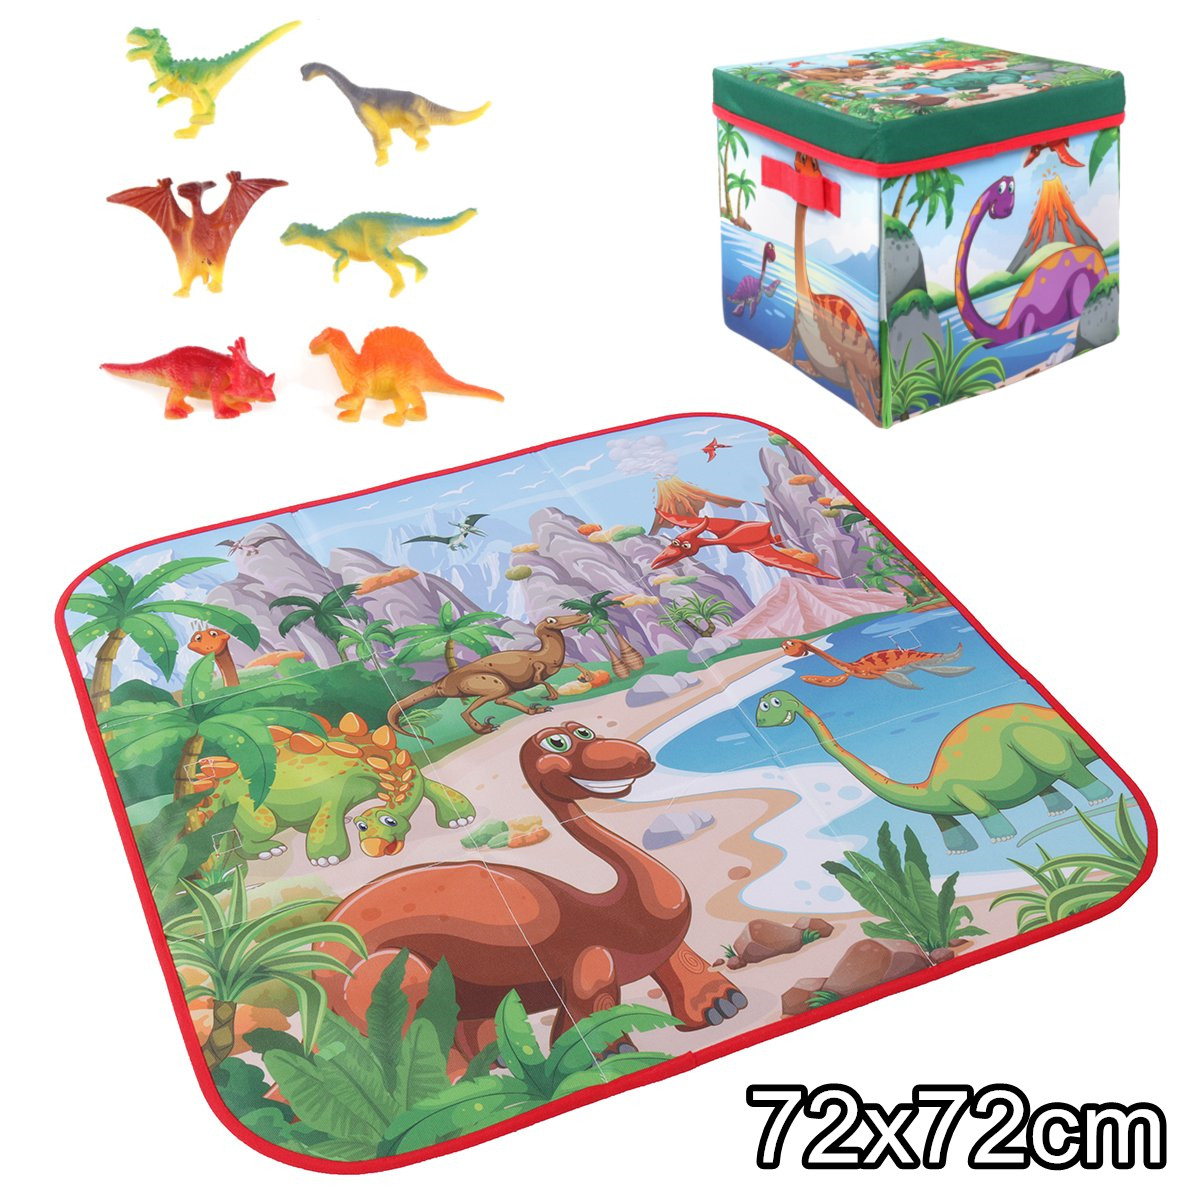 72x72cm-Children-Cartoon-Play-Mat6-Dinosaur-Toy-Square-Folding-Box-Camping-Mat-Kid-Toddler-Crawling--1636027-1